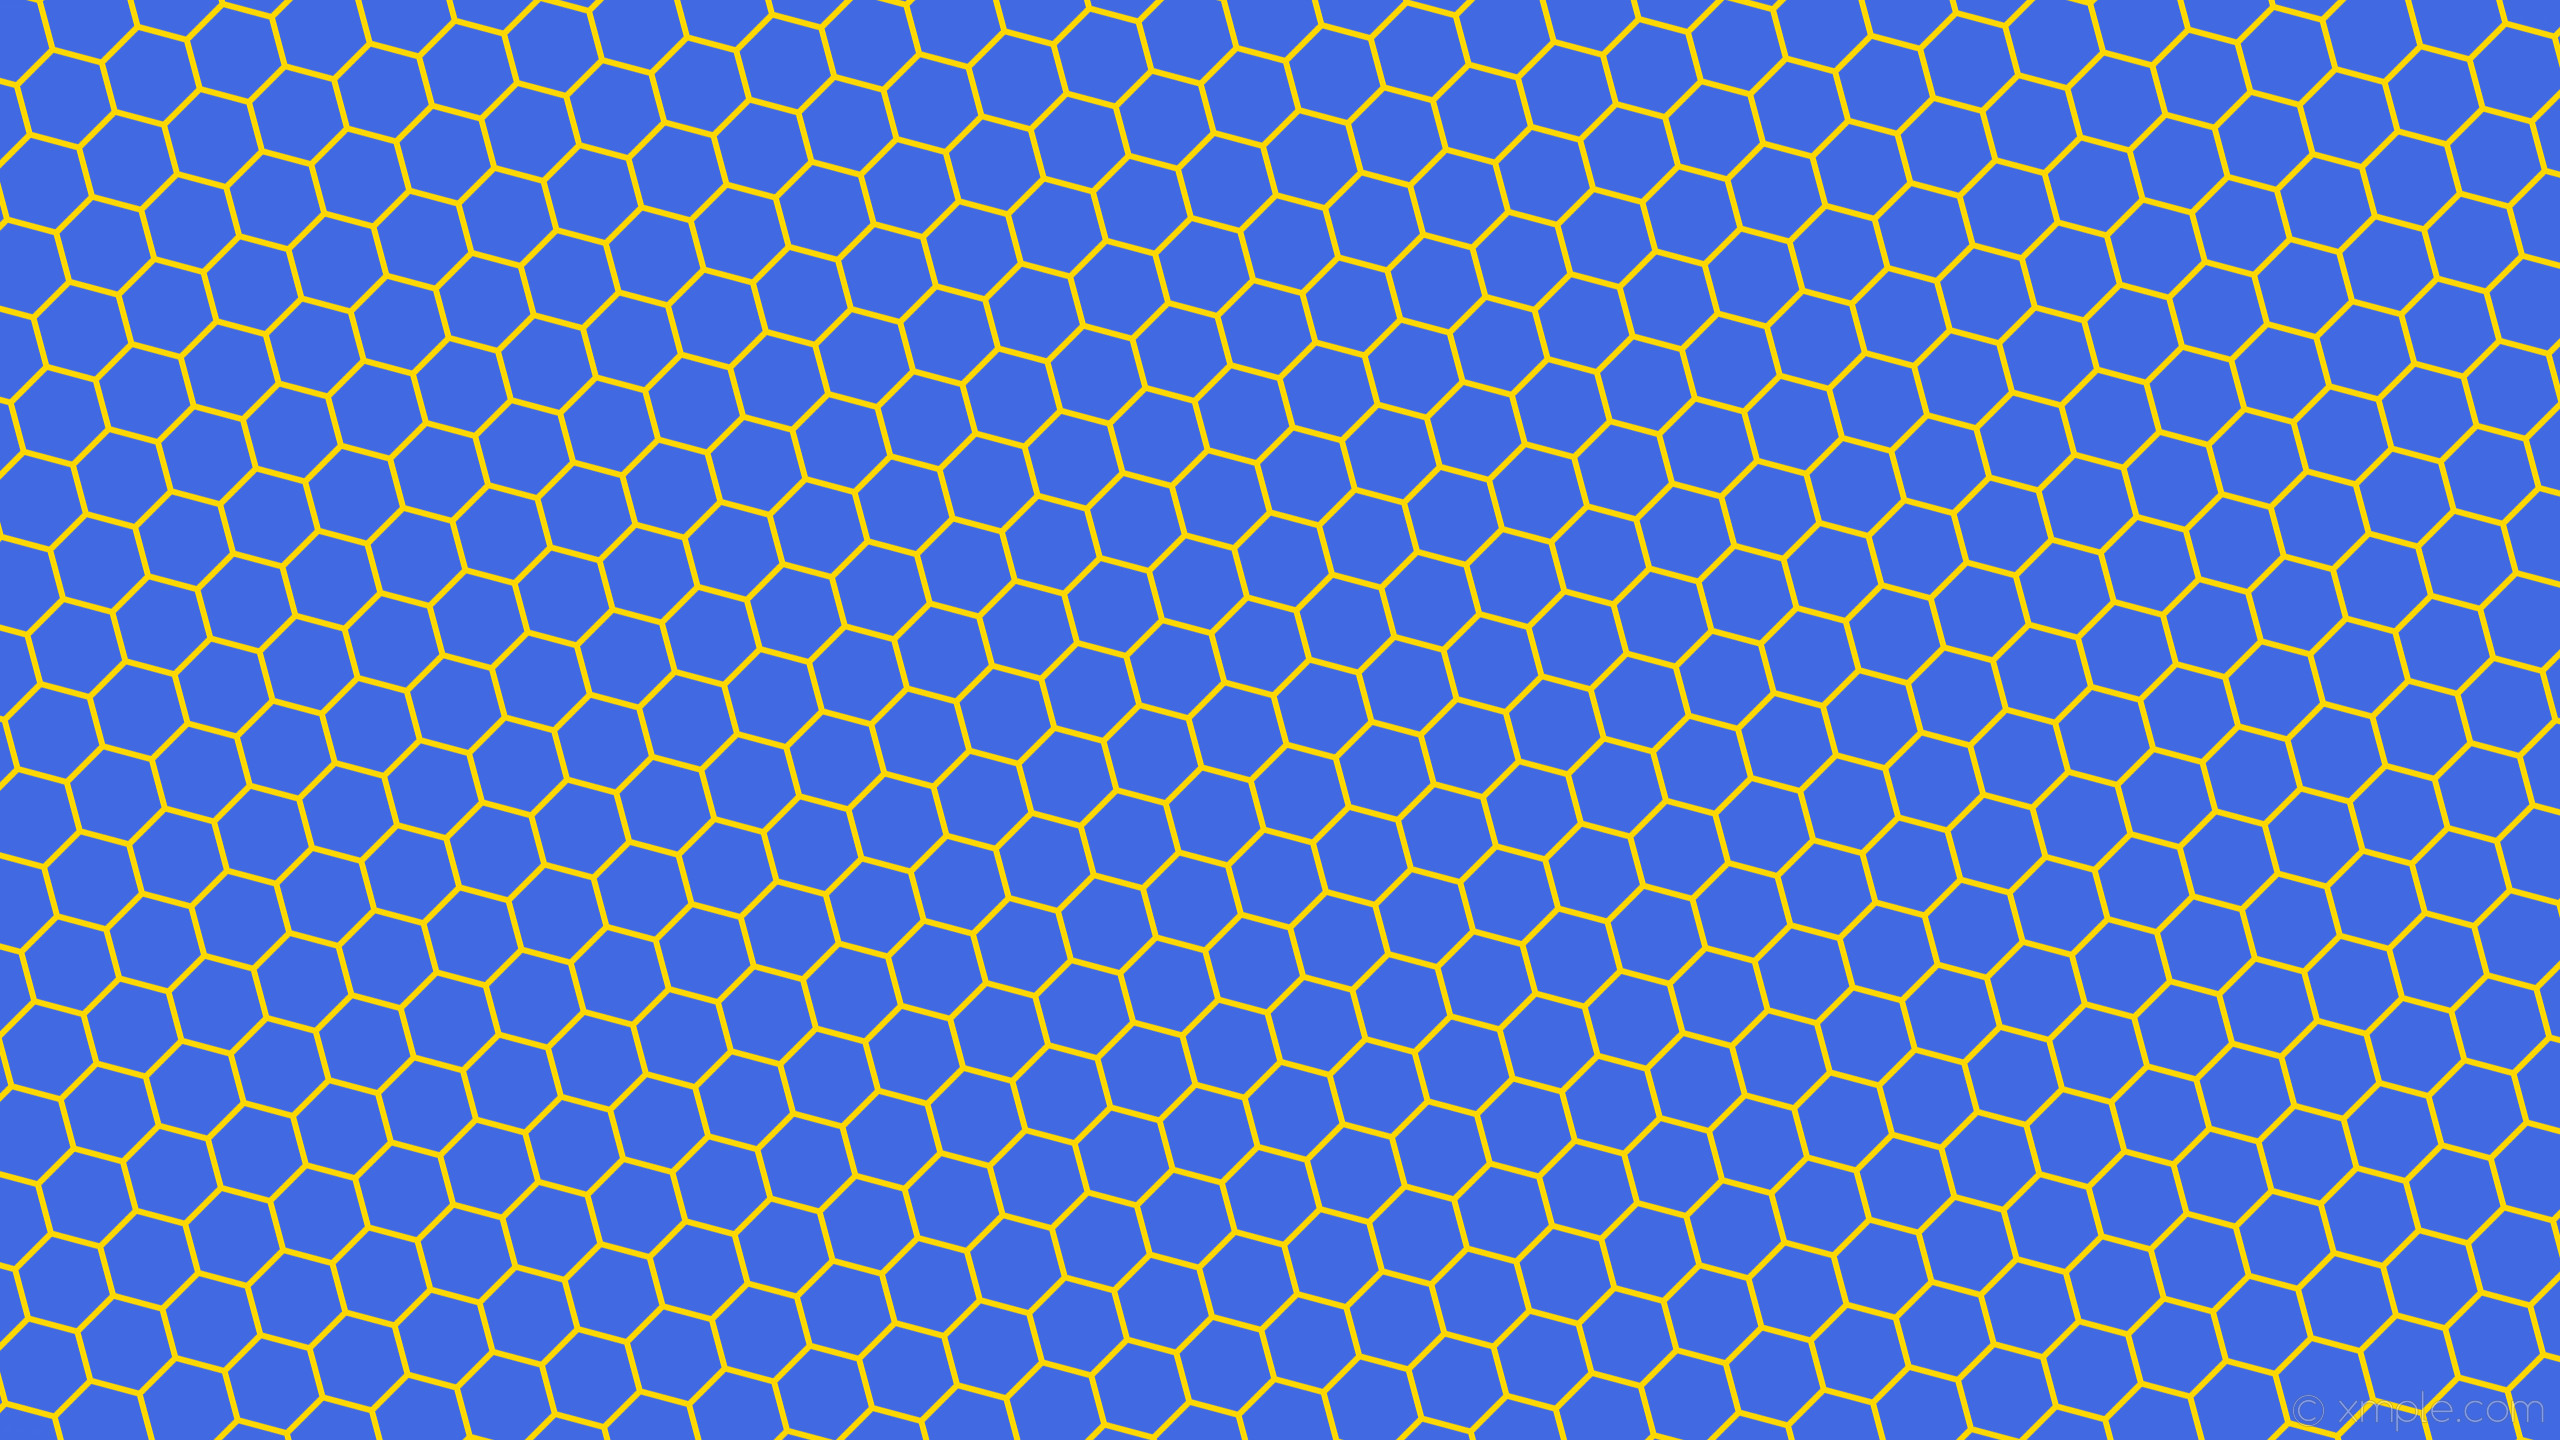 2560x1440 wallpaper yellow hexagon beehive honeycomb blue royal blue gold #4169e1  #ffd700 diagonal 15Â°